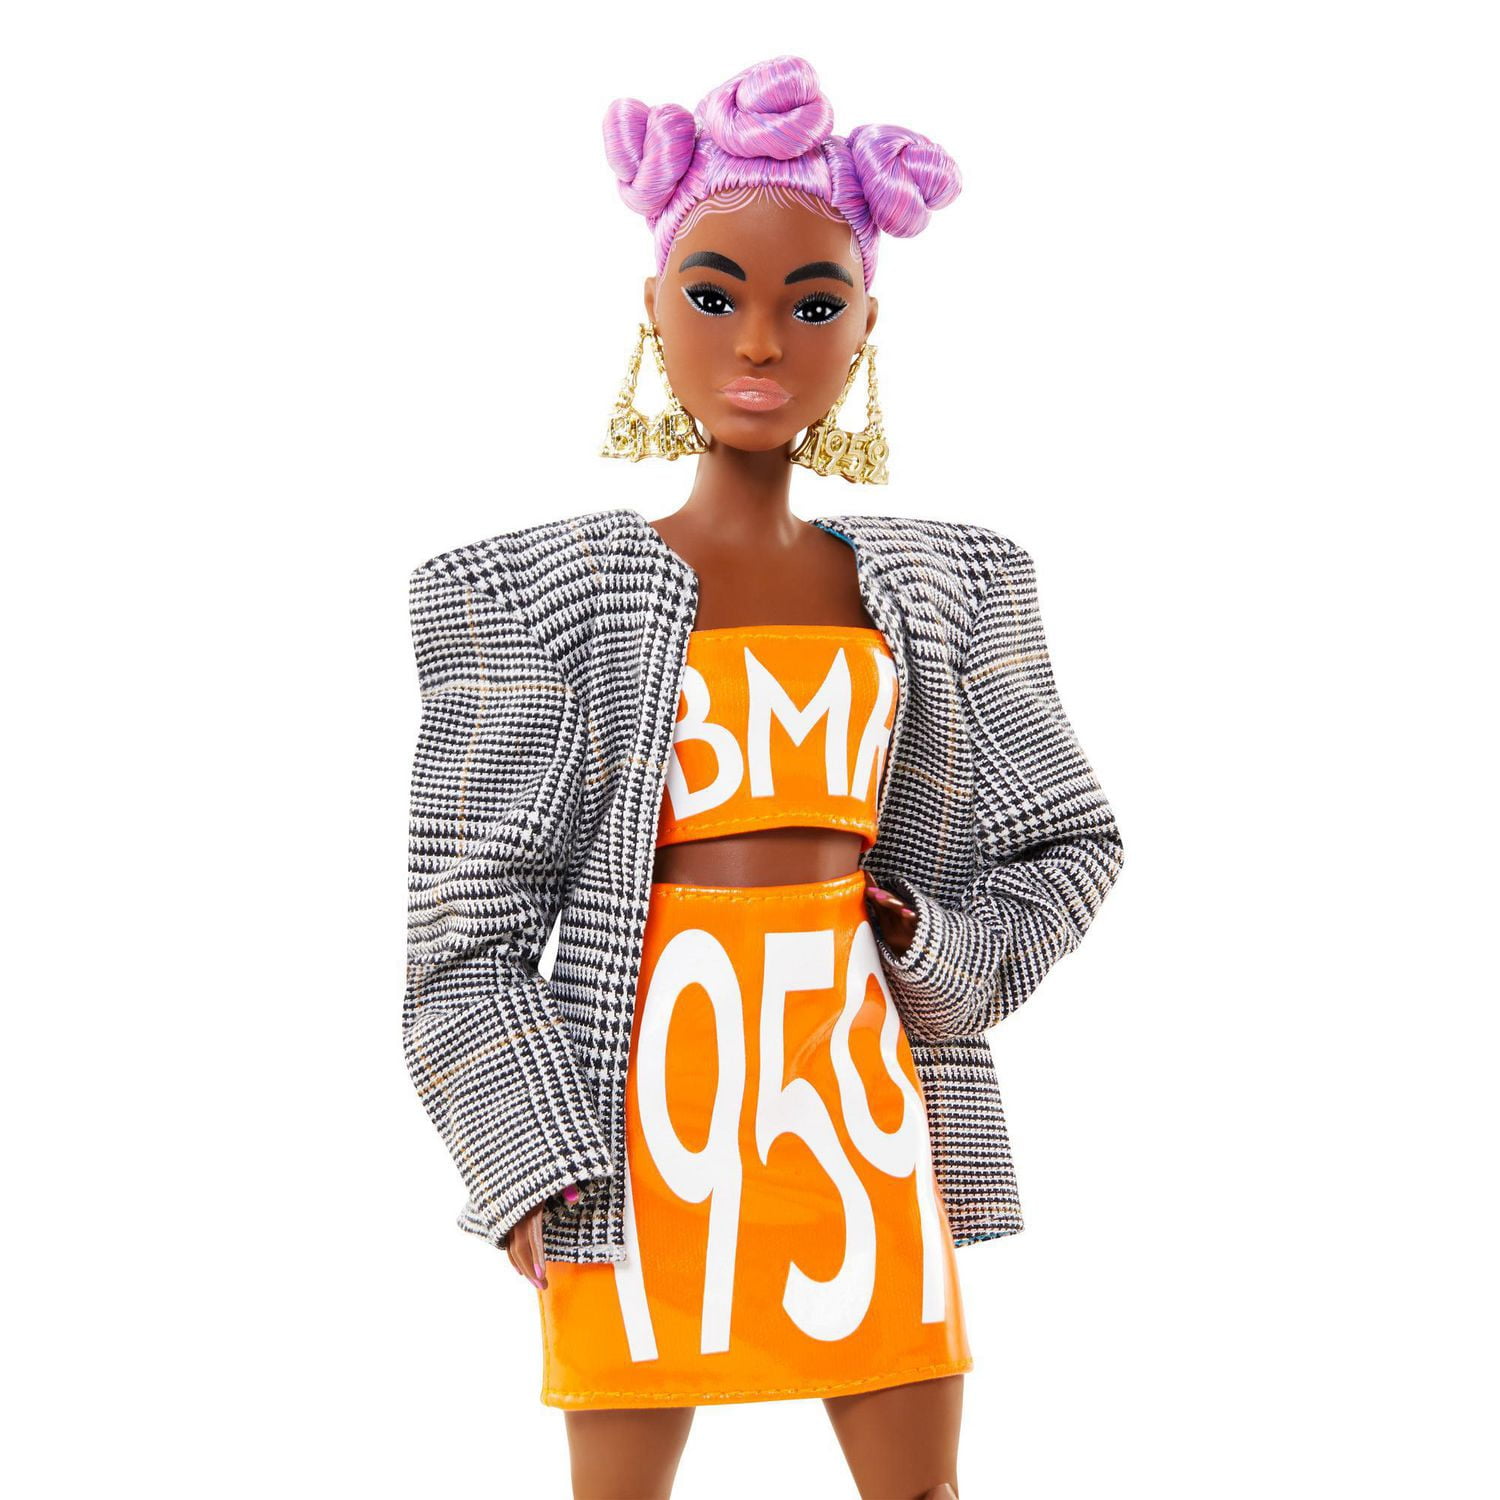 Barbie Signature BMR1959 Doll - Matching Logo Top, Skirt with Blazer